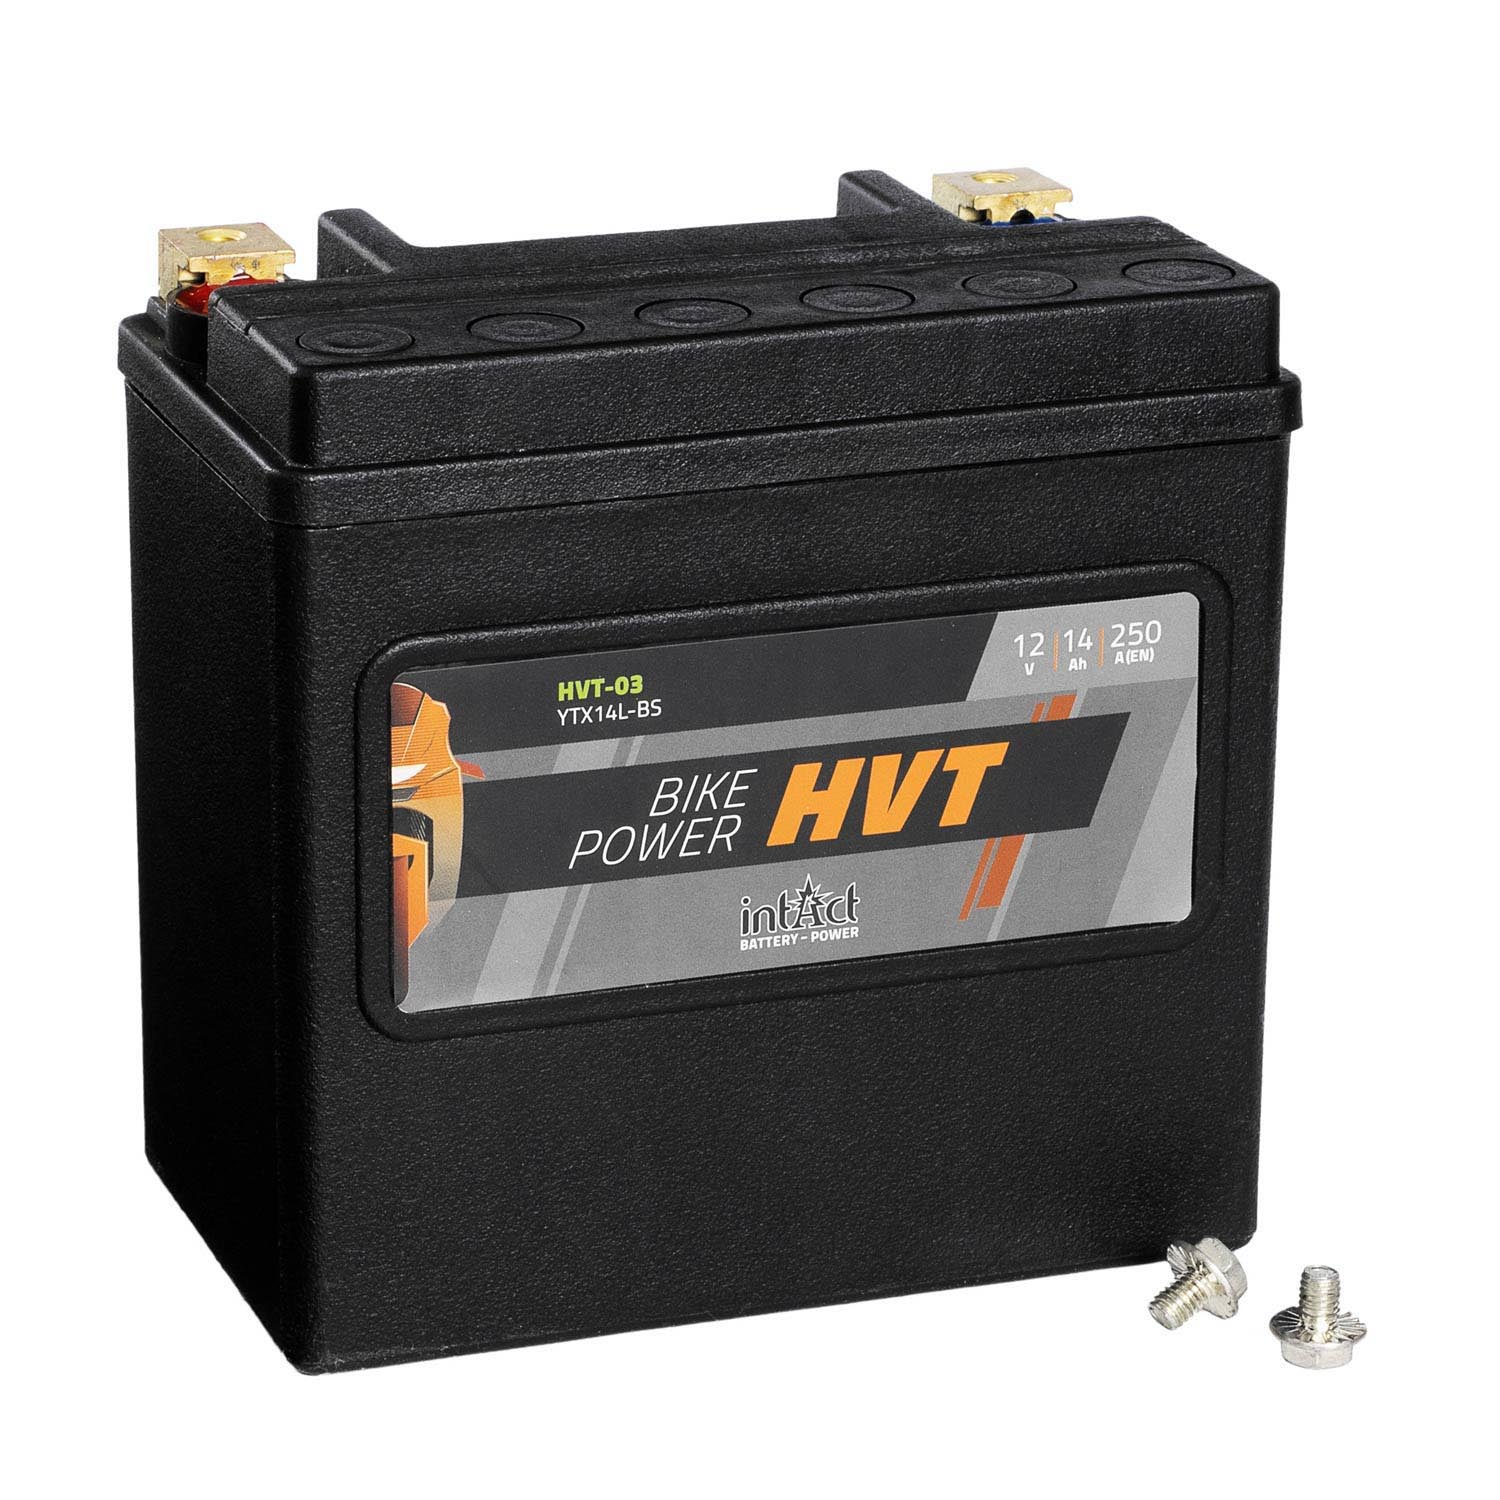 intAct Bike-Power Motorradbatterie HVT YTX14L-BS 12V 14Ah HVT-03